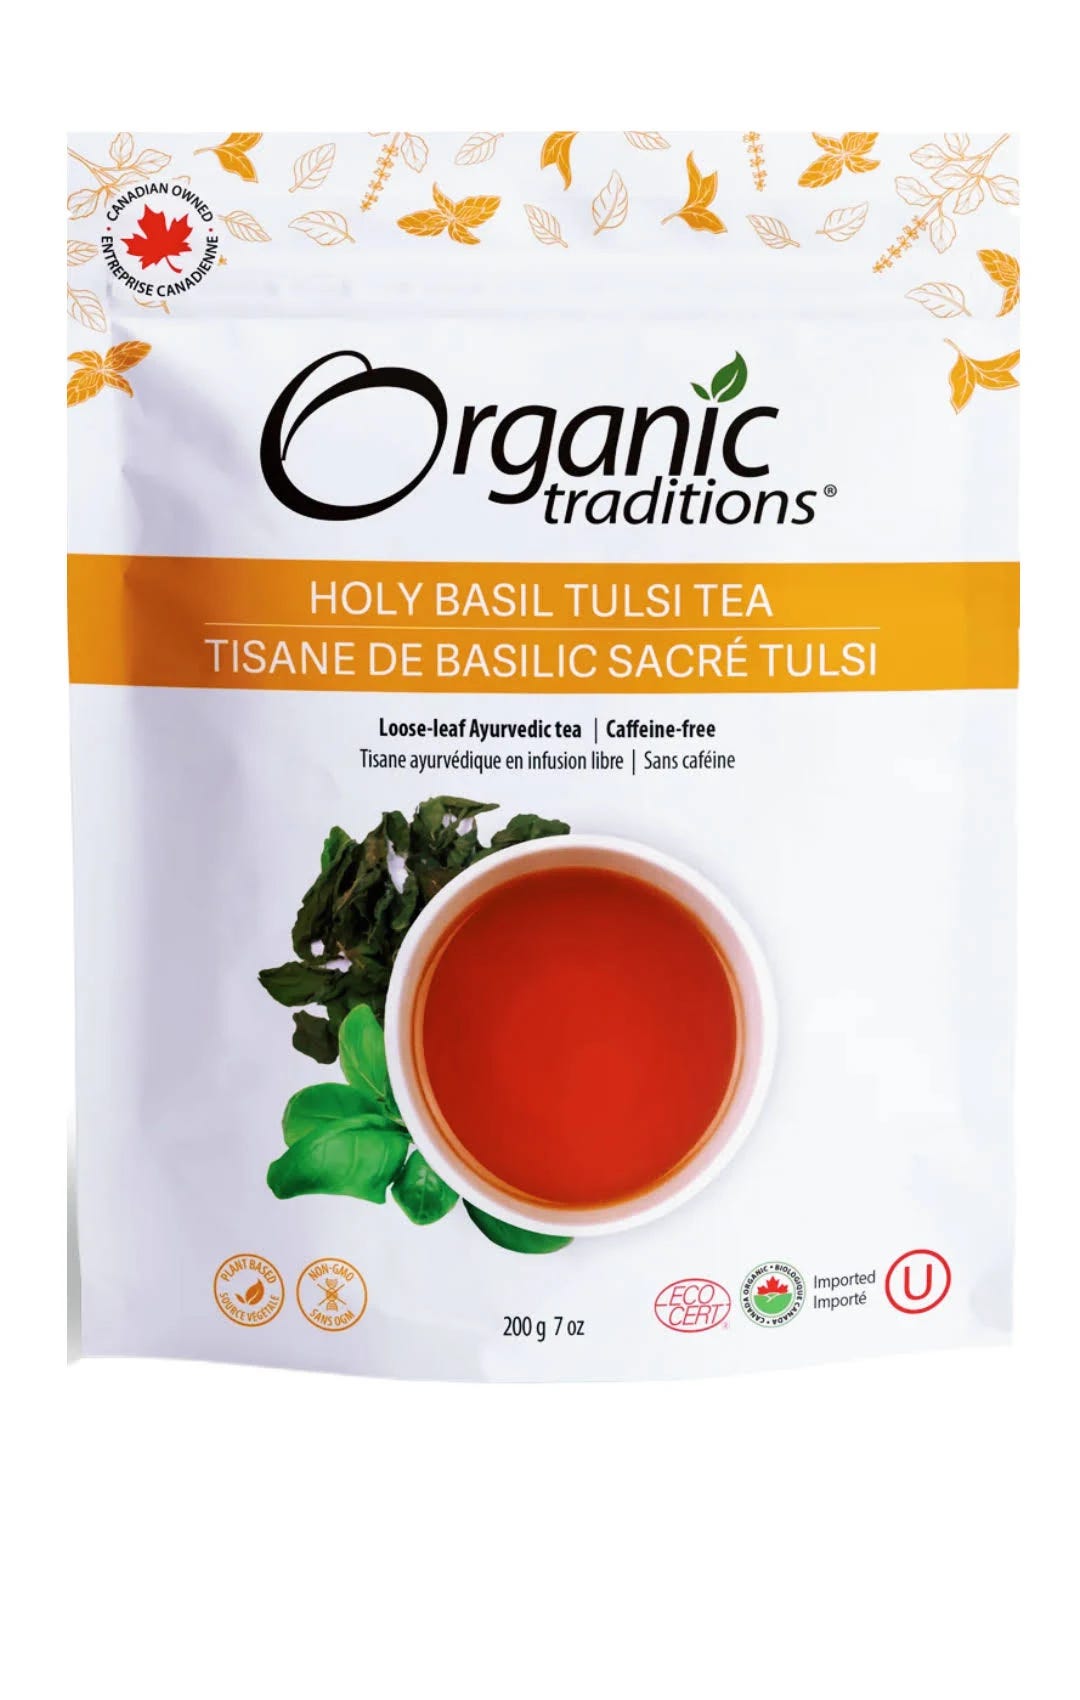 Organic Traditions Holy Basil Tulsi Tea | Image